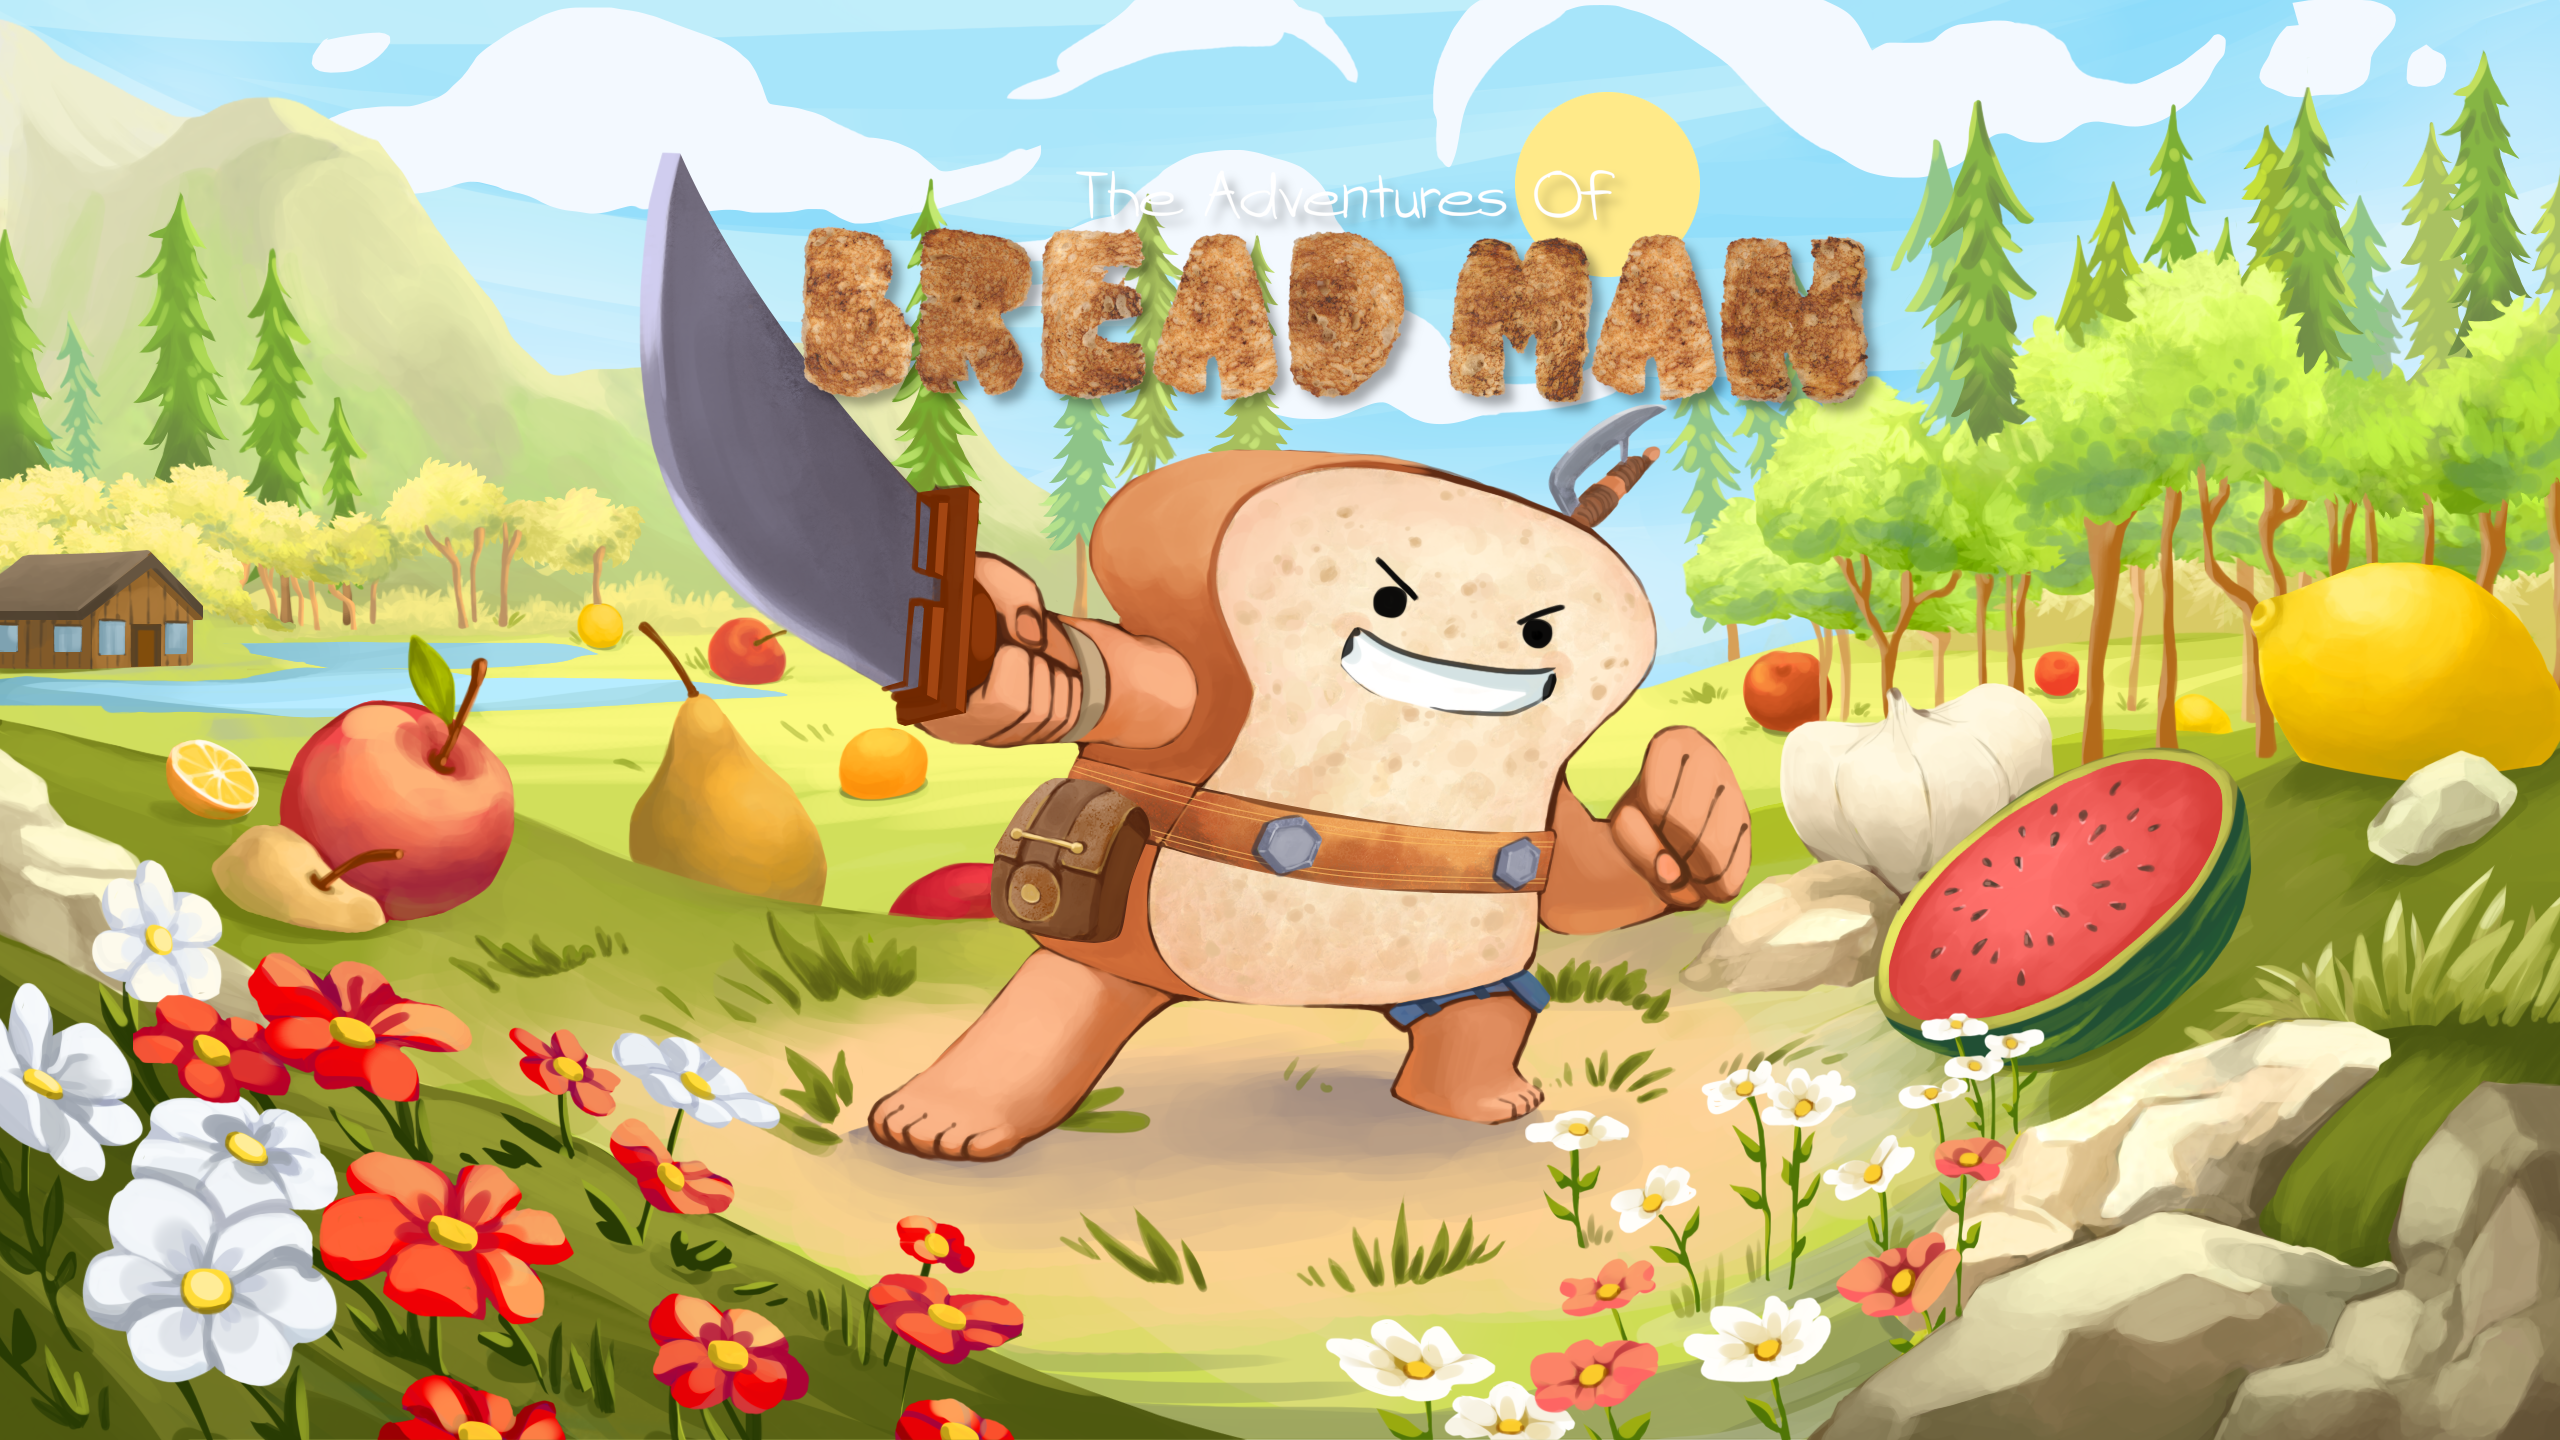 Kickstarter Project of the Week: The Adventures Of Breadman